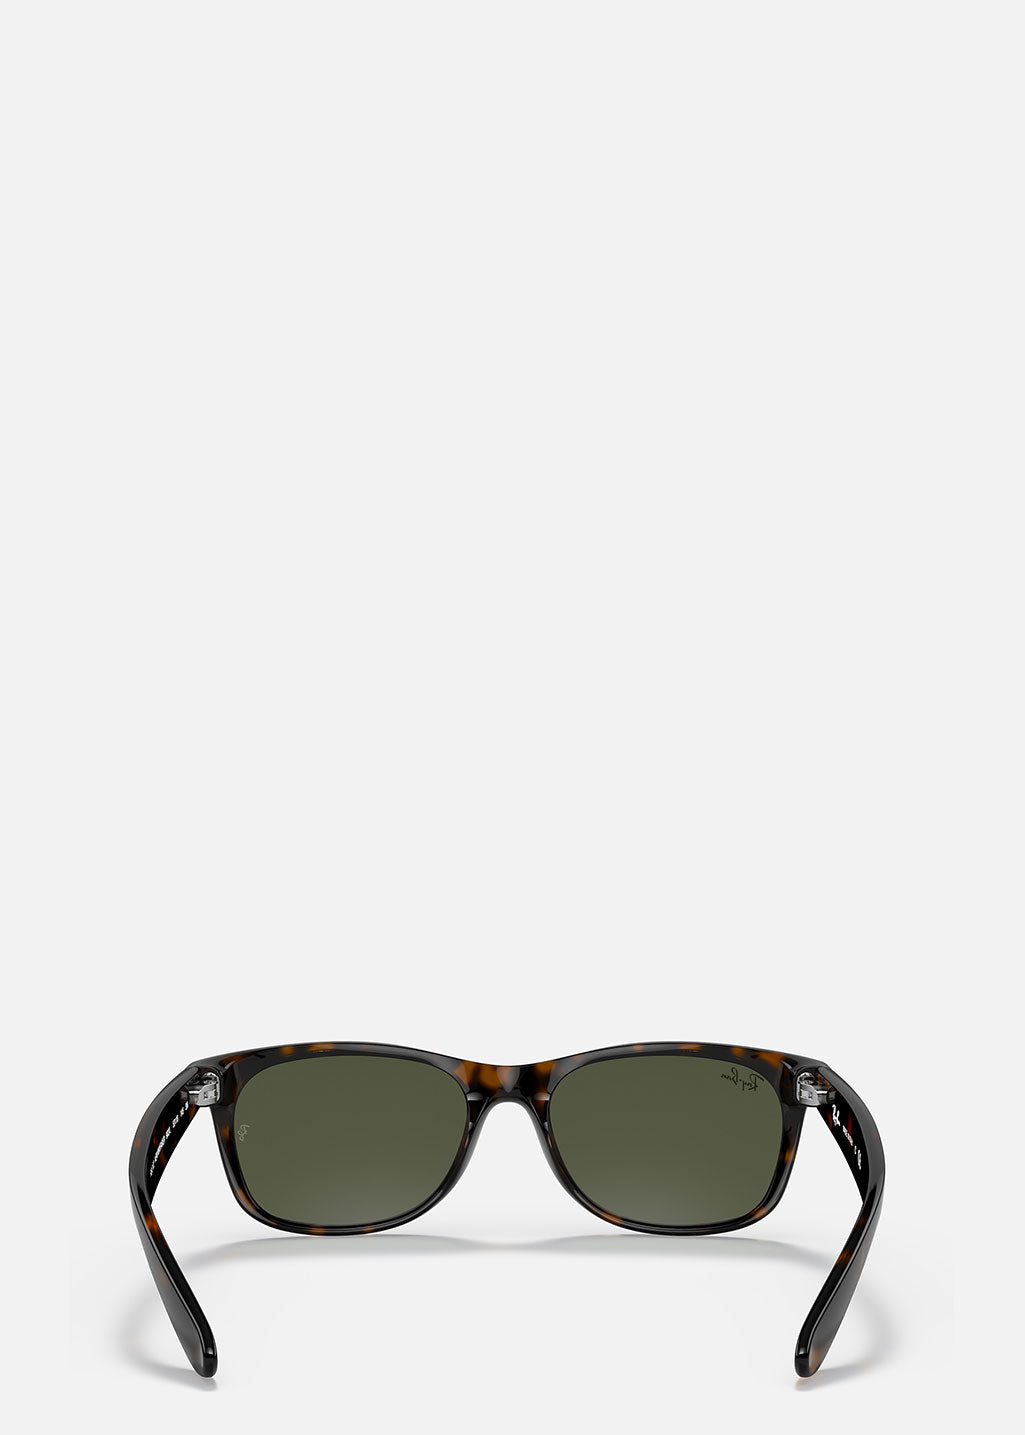 Buy CORNO Wayfarer Sunglasses Black For Men Online @ Best Prices in India |  Flipkart.com